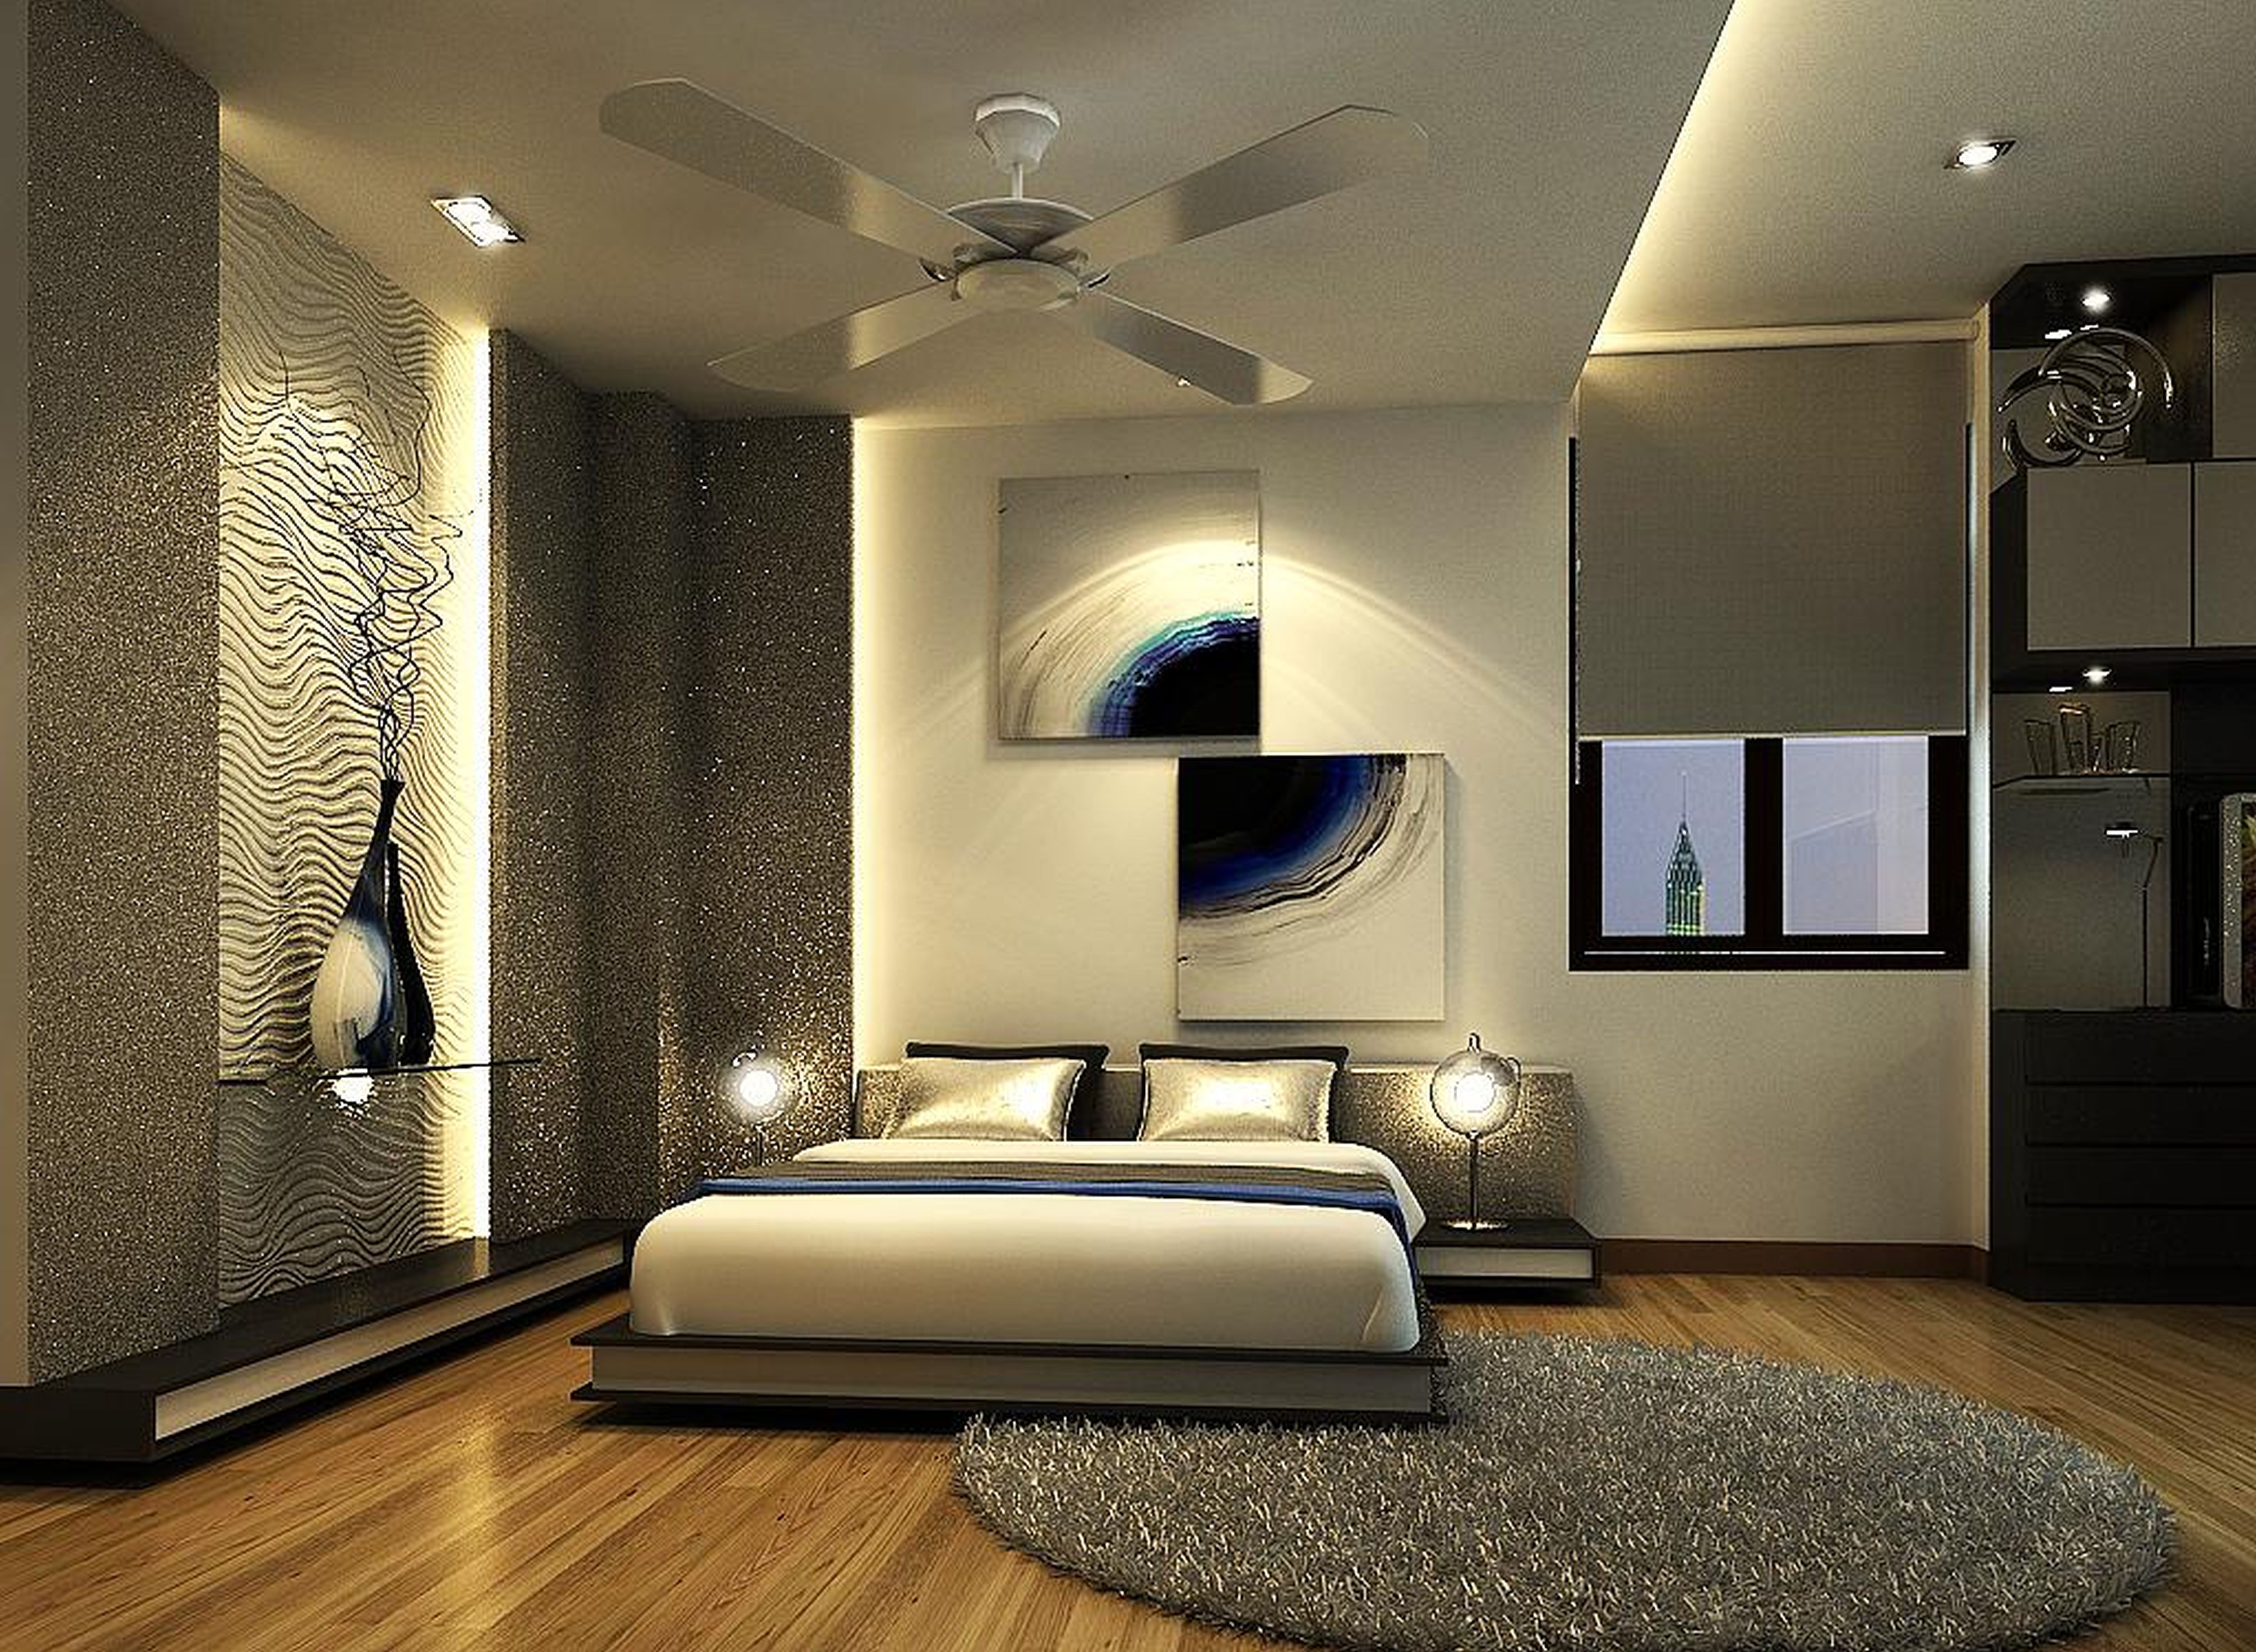 Cozy and stylish bedroom